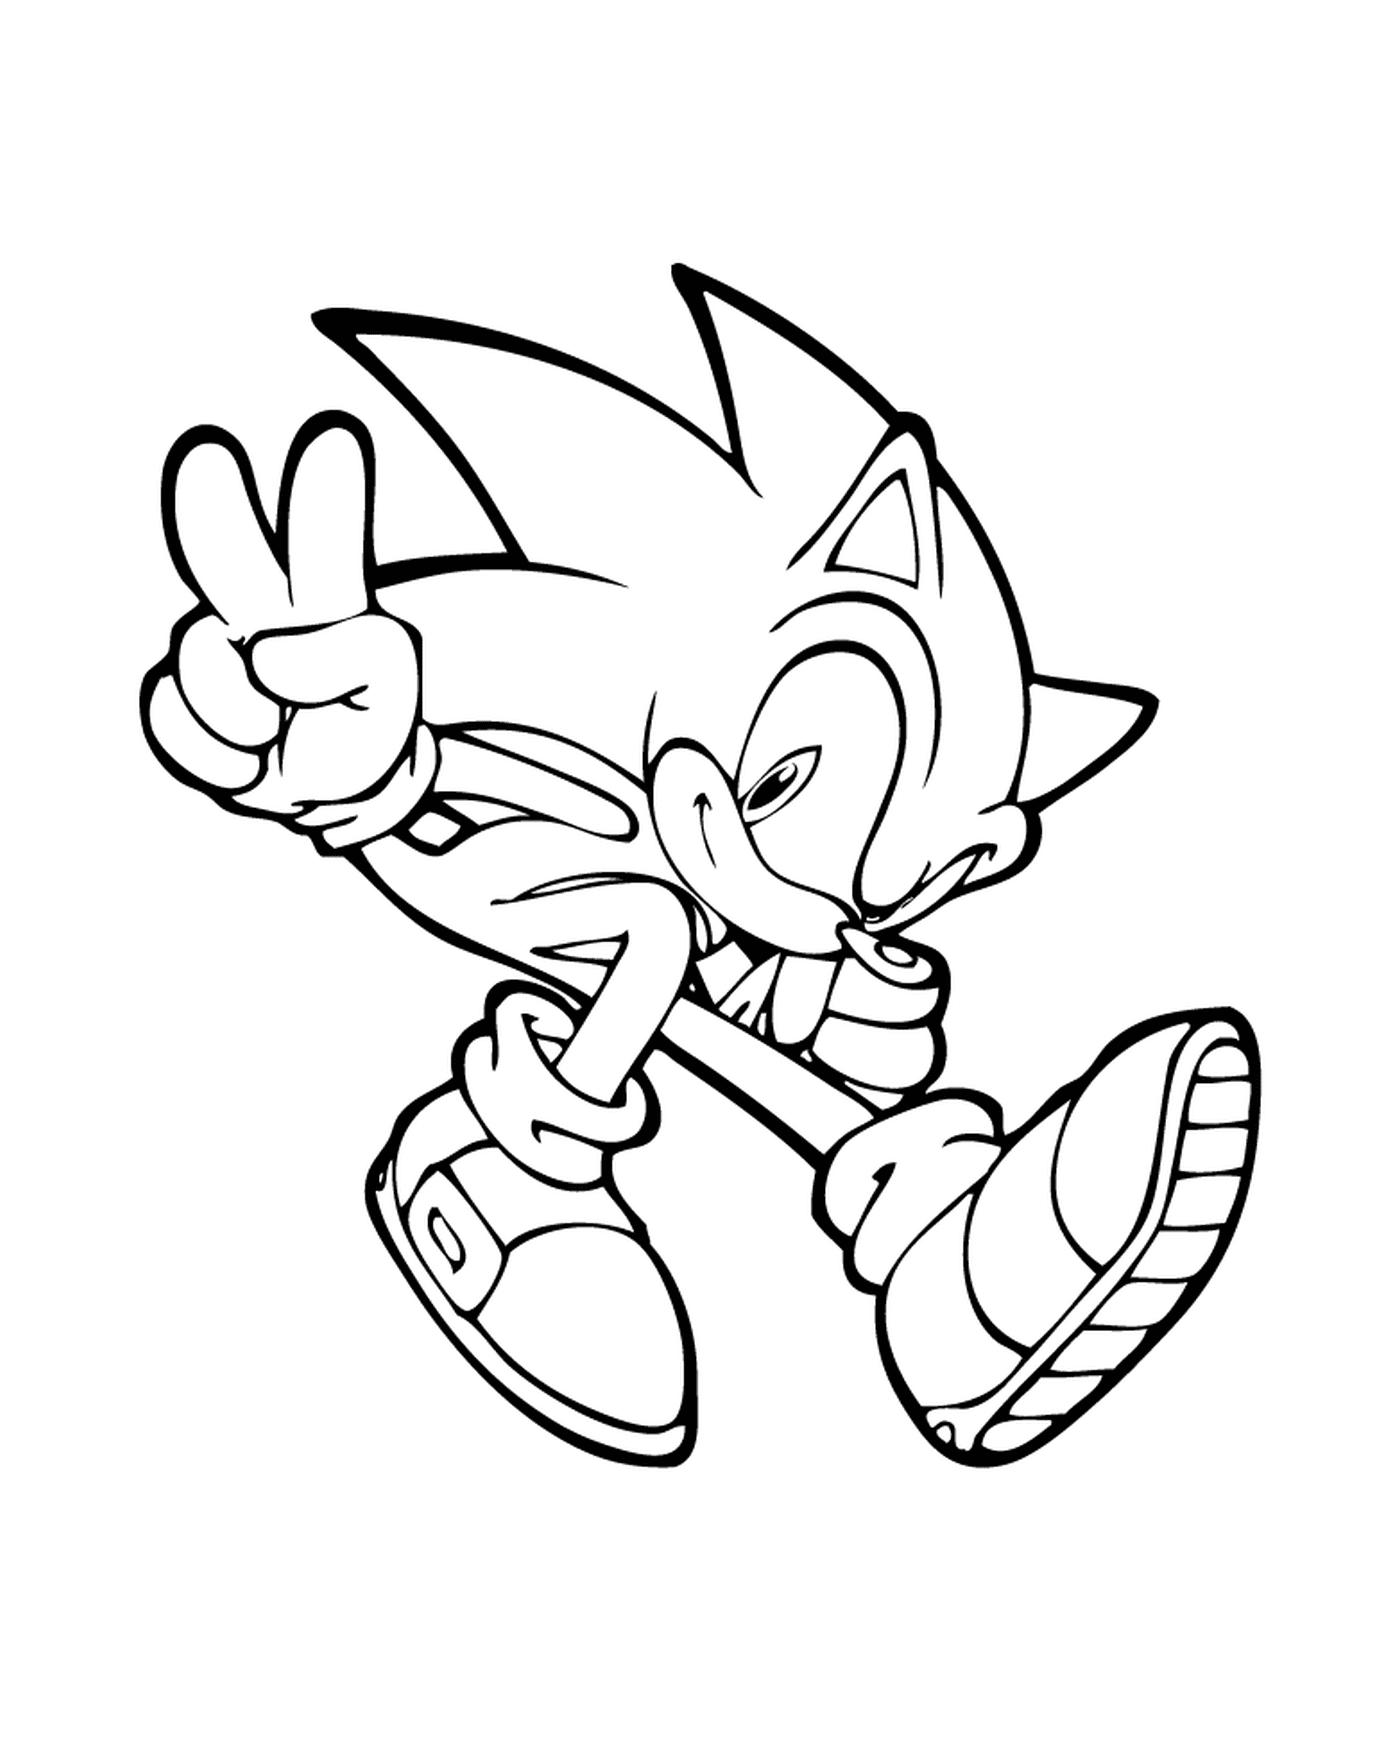   Sonic the Hedgehog en sautant 